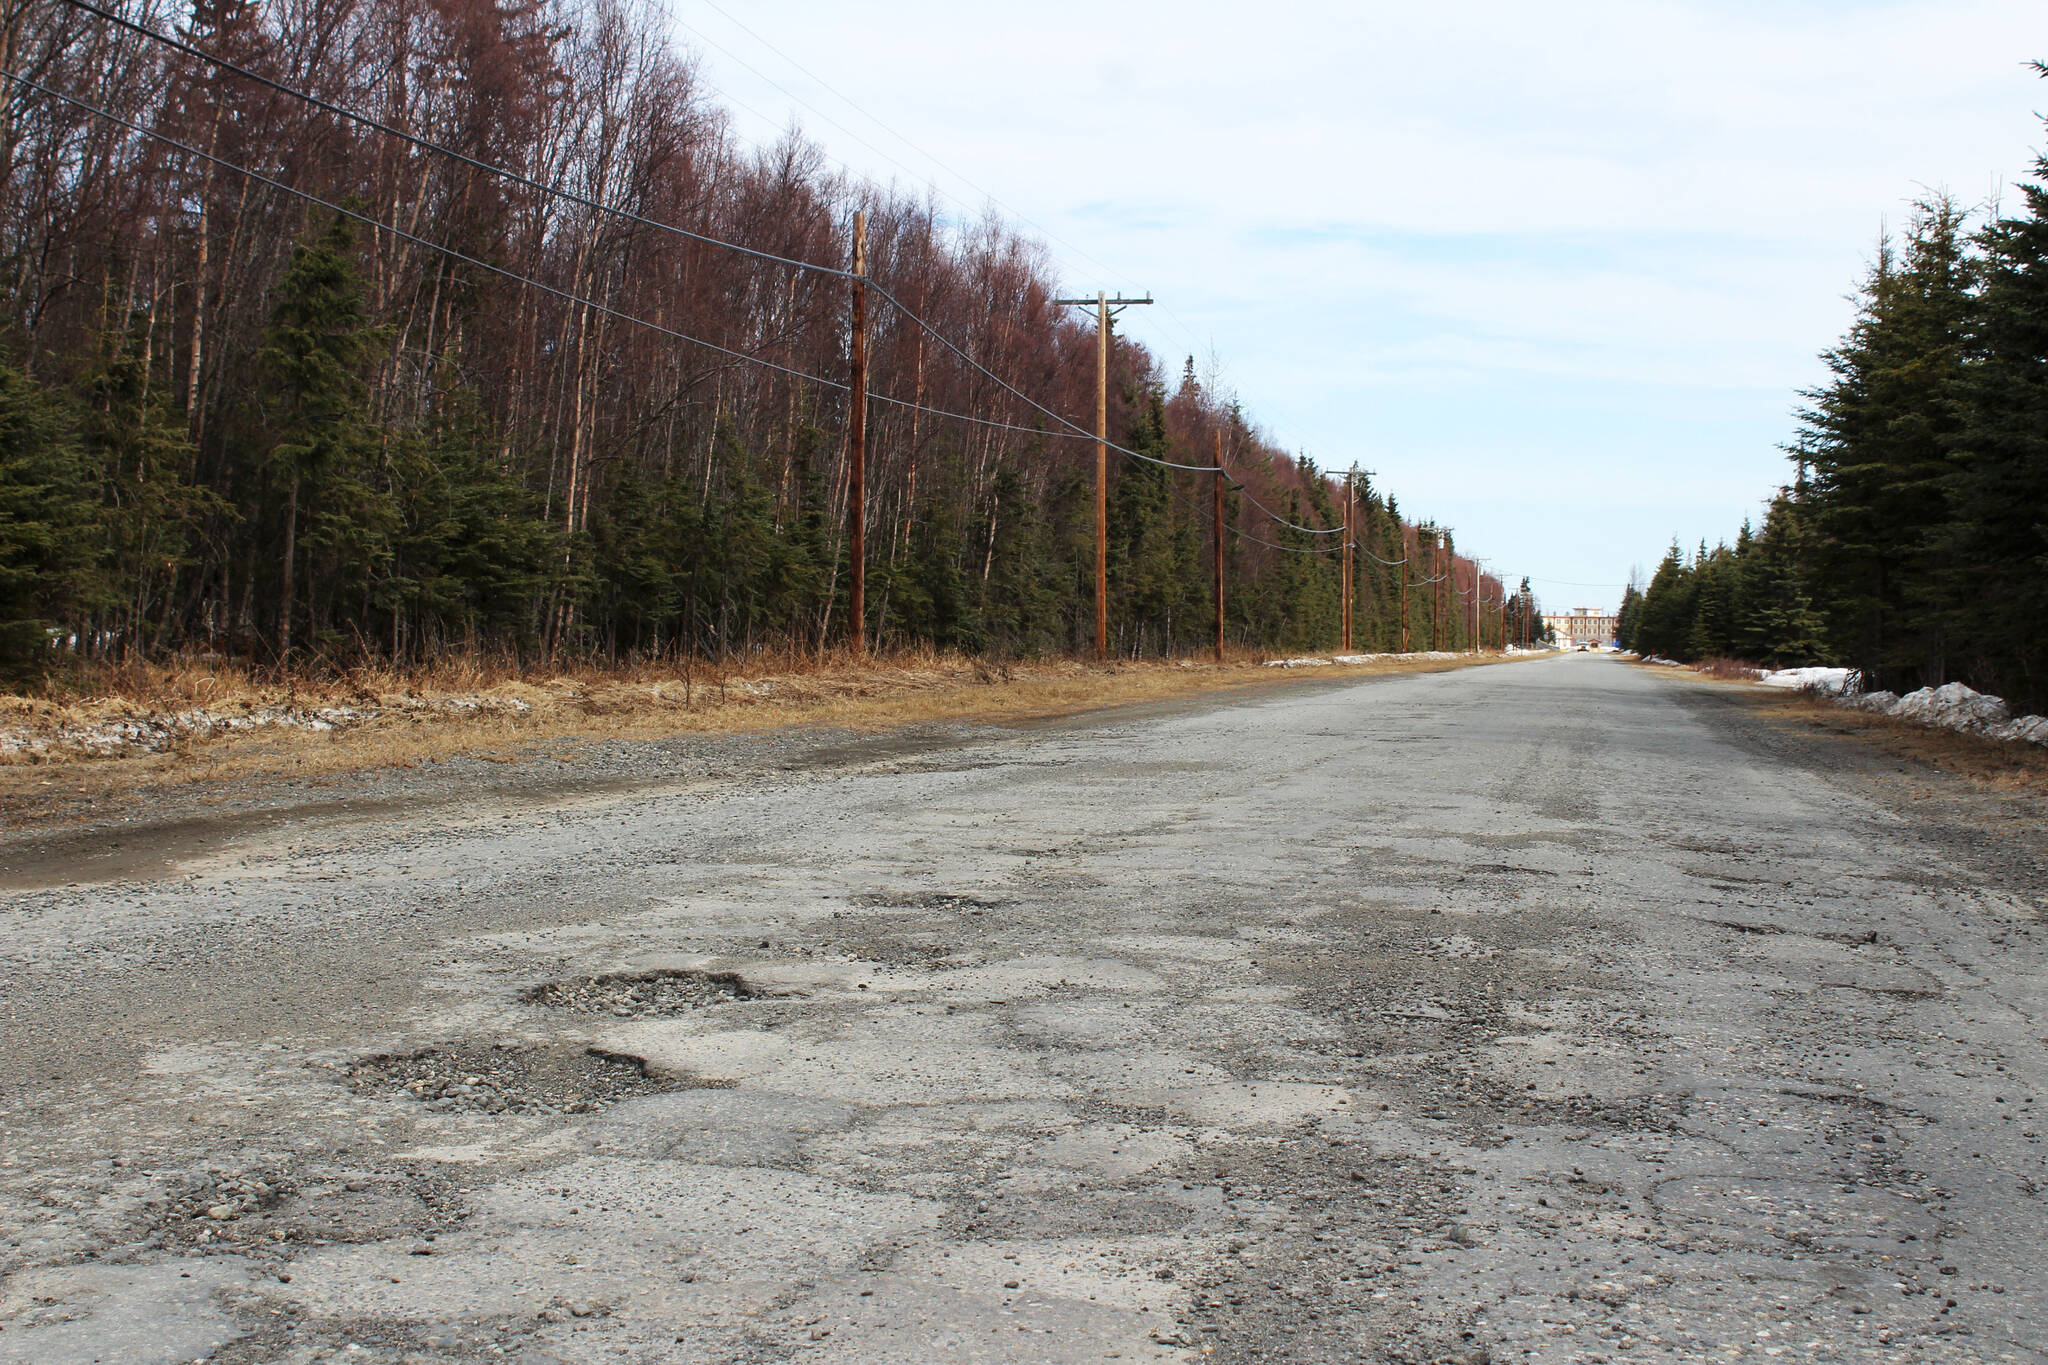 Potholes are seen on Wildwood Drive on Thursday, April 22, 2021, in Kenai, Alaska. (Ashlyn O’Hara/Peninsula Clarion)